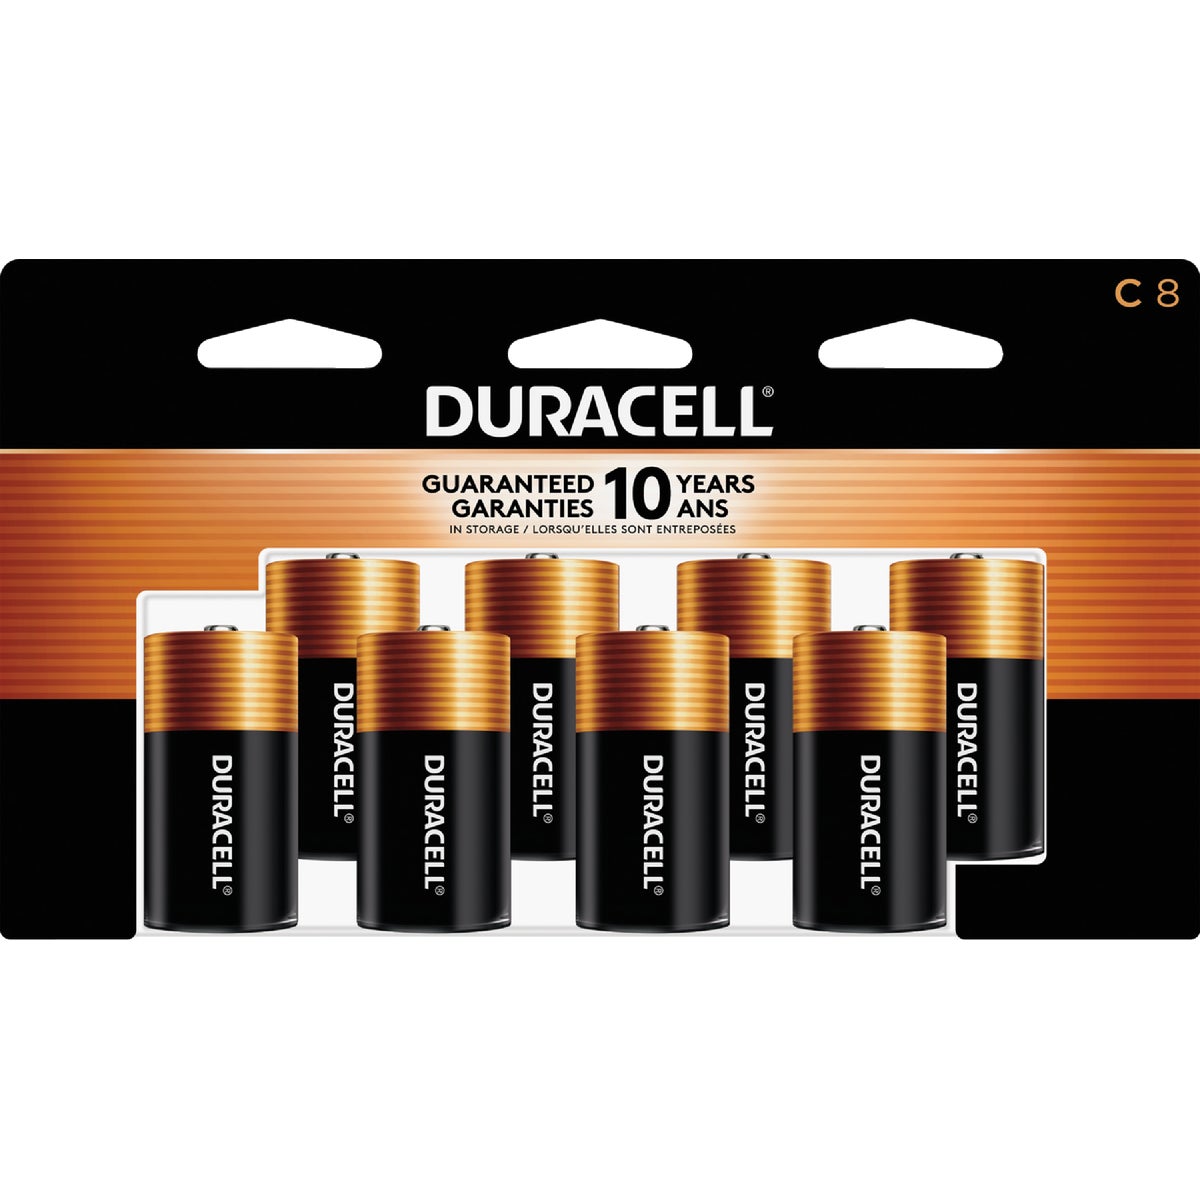 Duracell CopperTop C Alkaline Battery (8-Pack)